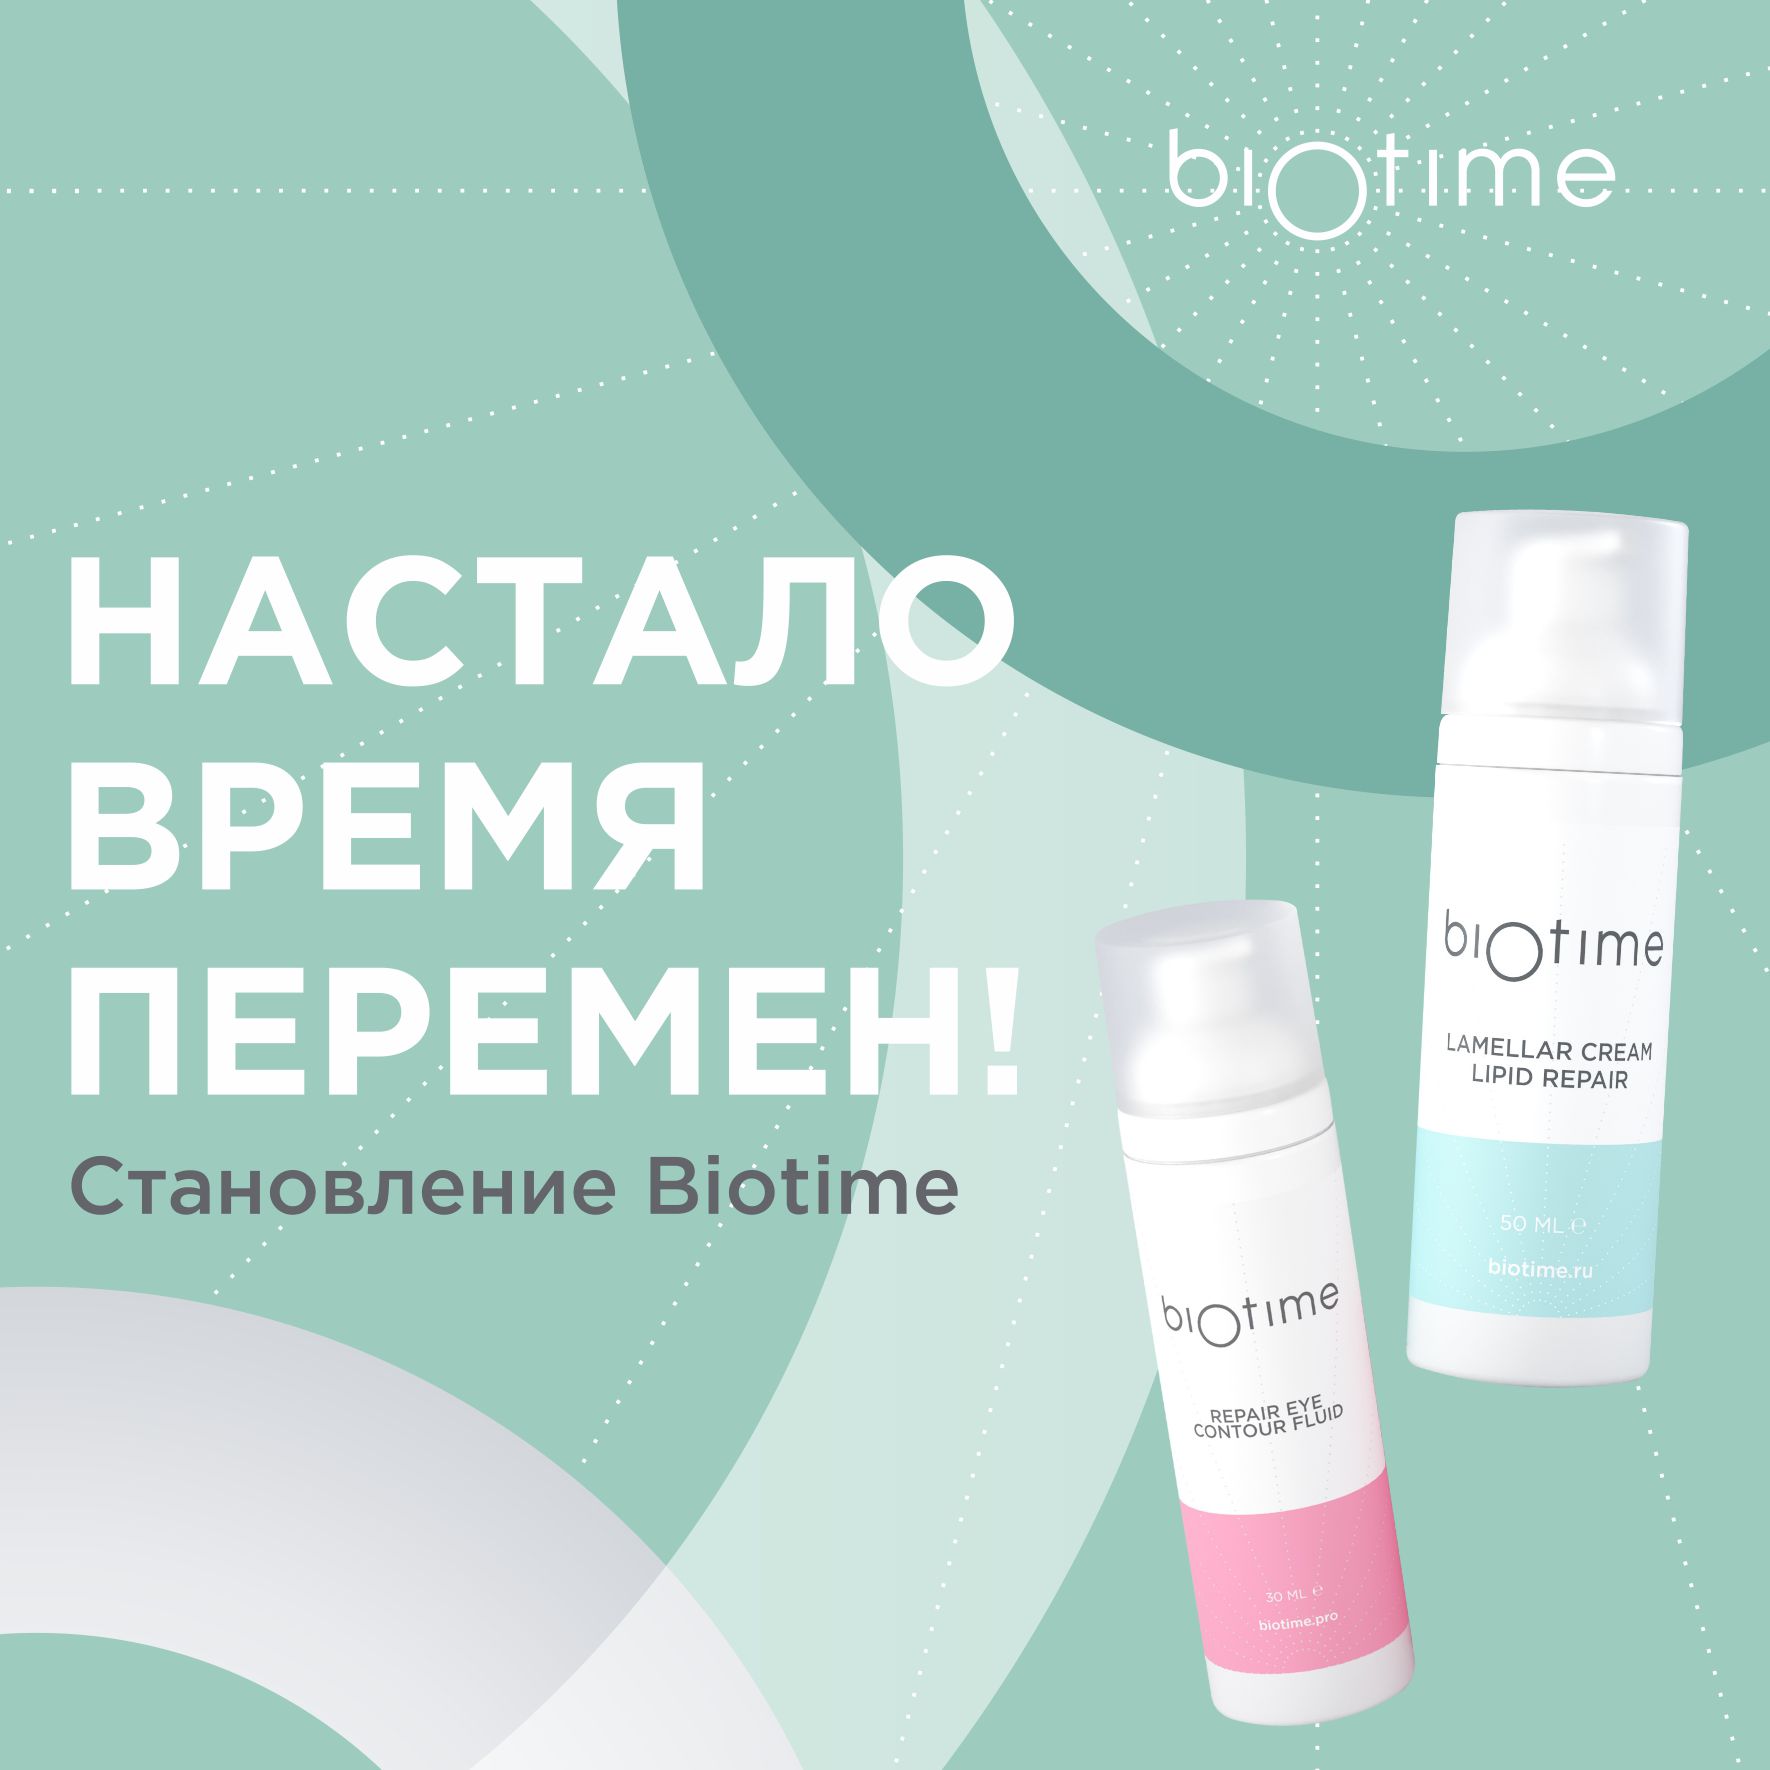 Biotime rebranding